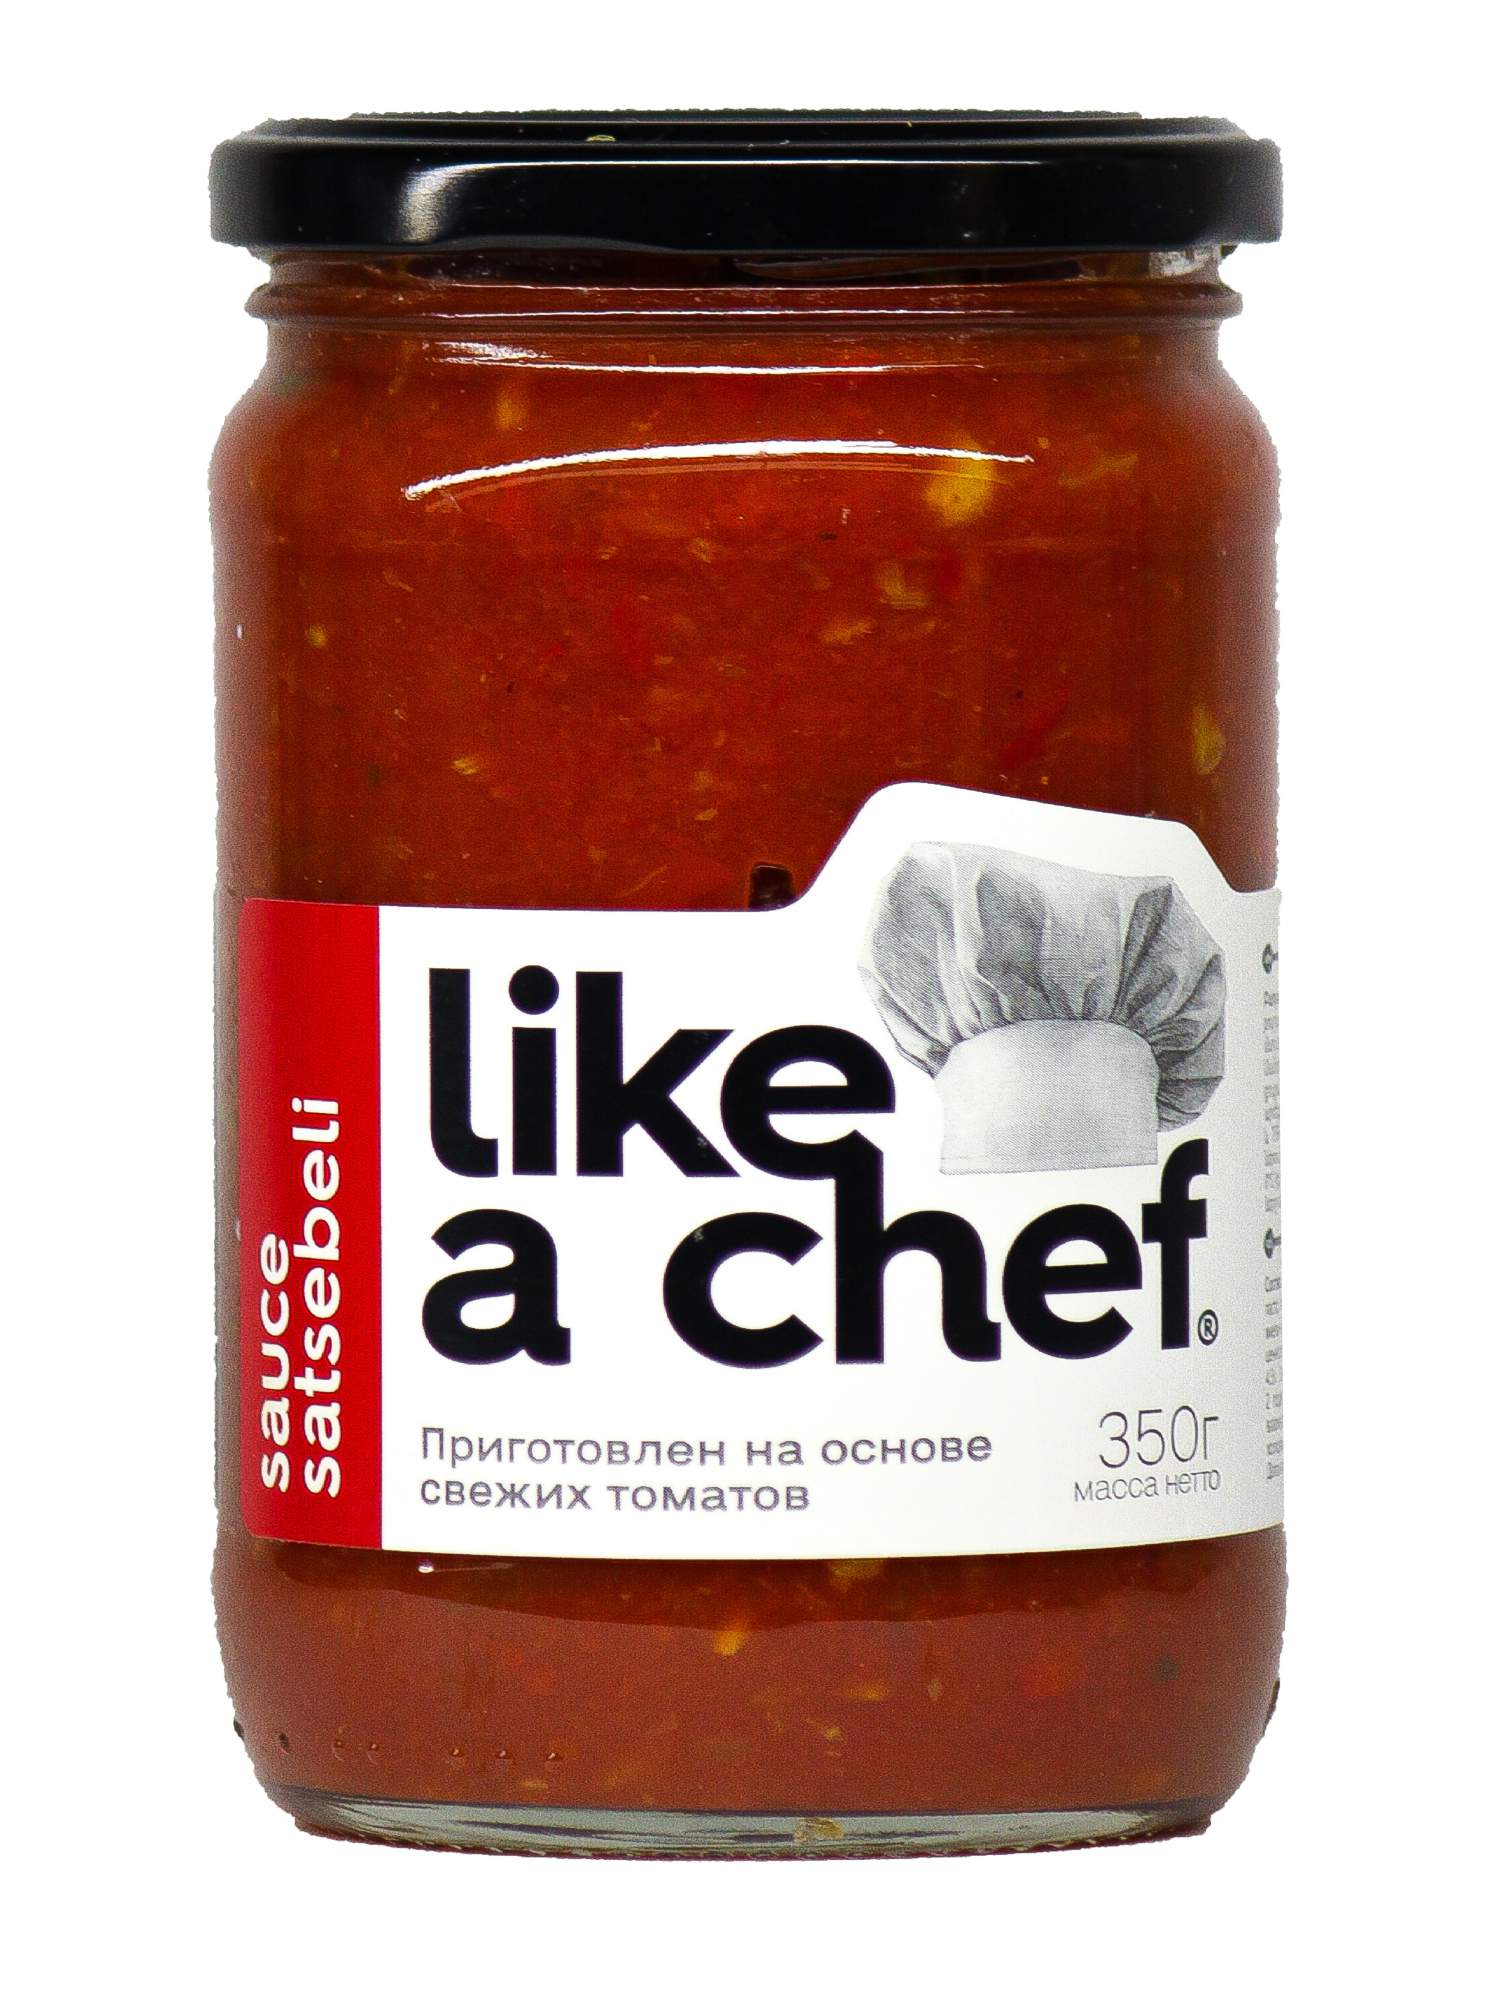 Купить томатный соус Satsebeli Like a chef 350 г, цены на Мегамаркет | Артикул: 600001100508